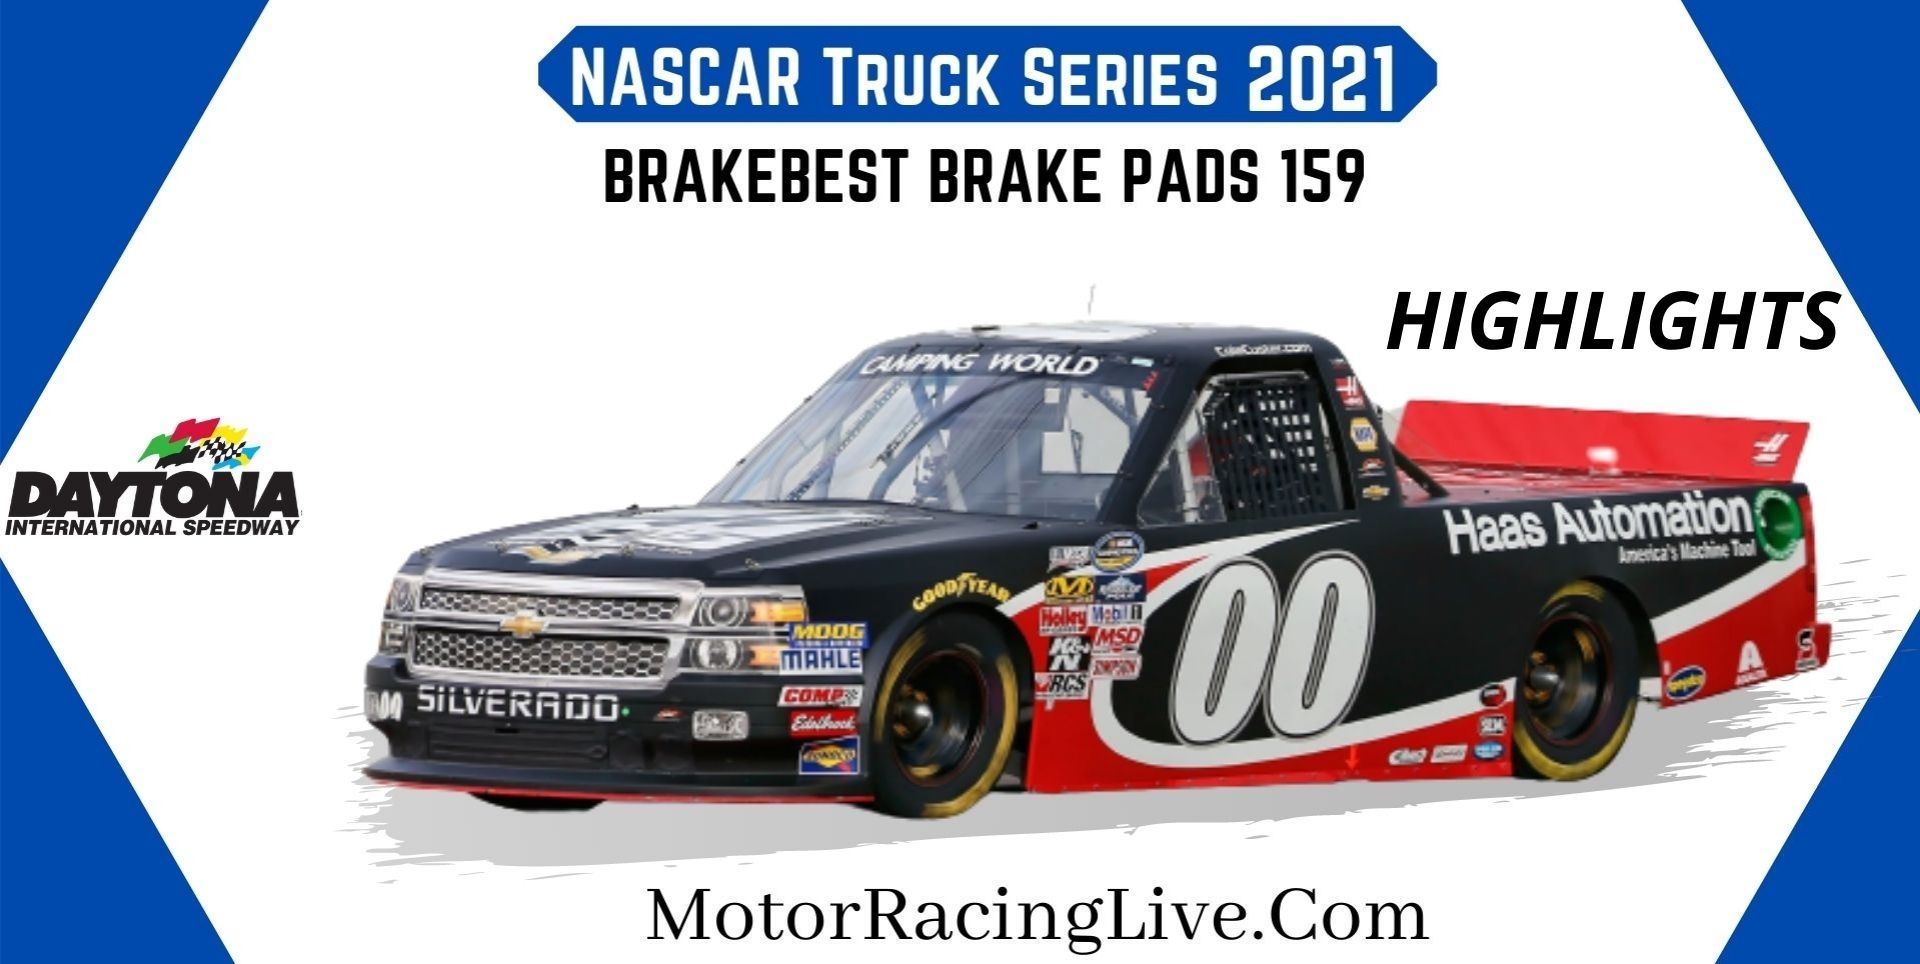 BrakeBest Brake Pads 159 Highlights 2021 NASCAR Truck Series